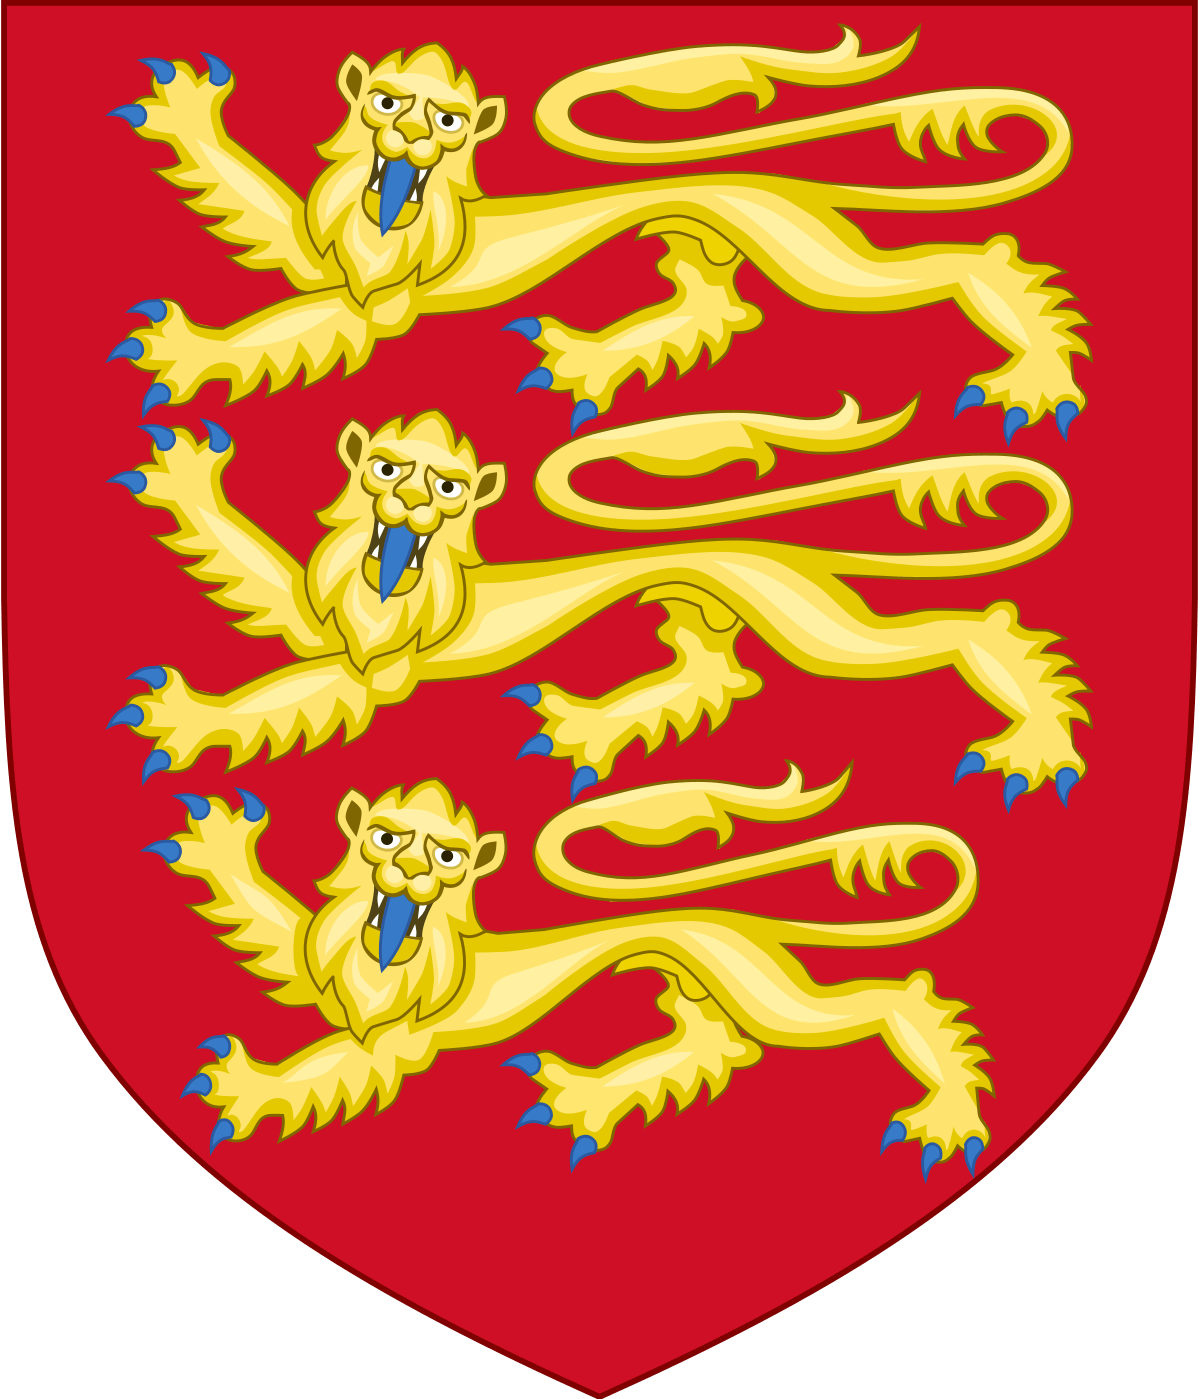 Kingdom of Lions Logo - Royal Arms of England